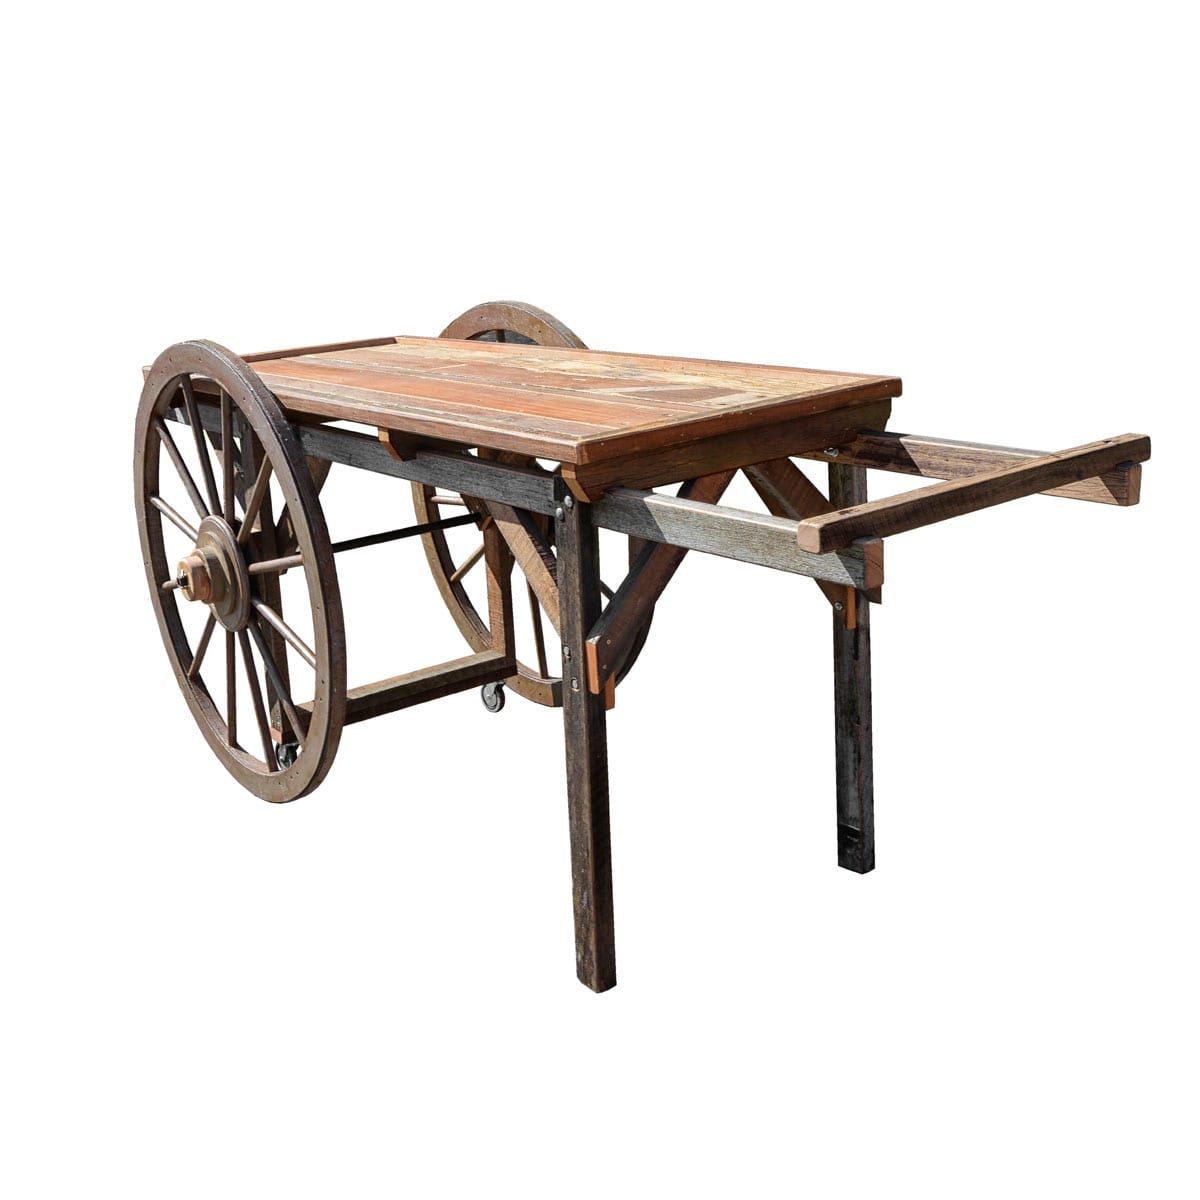 Cart 10 – Rustic Flat-bed Cart